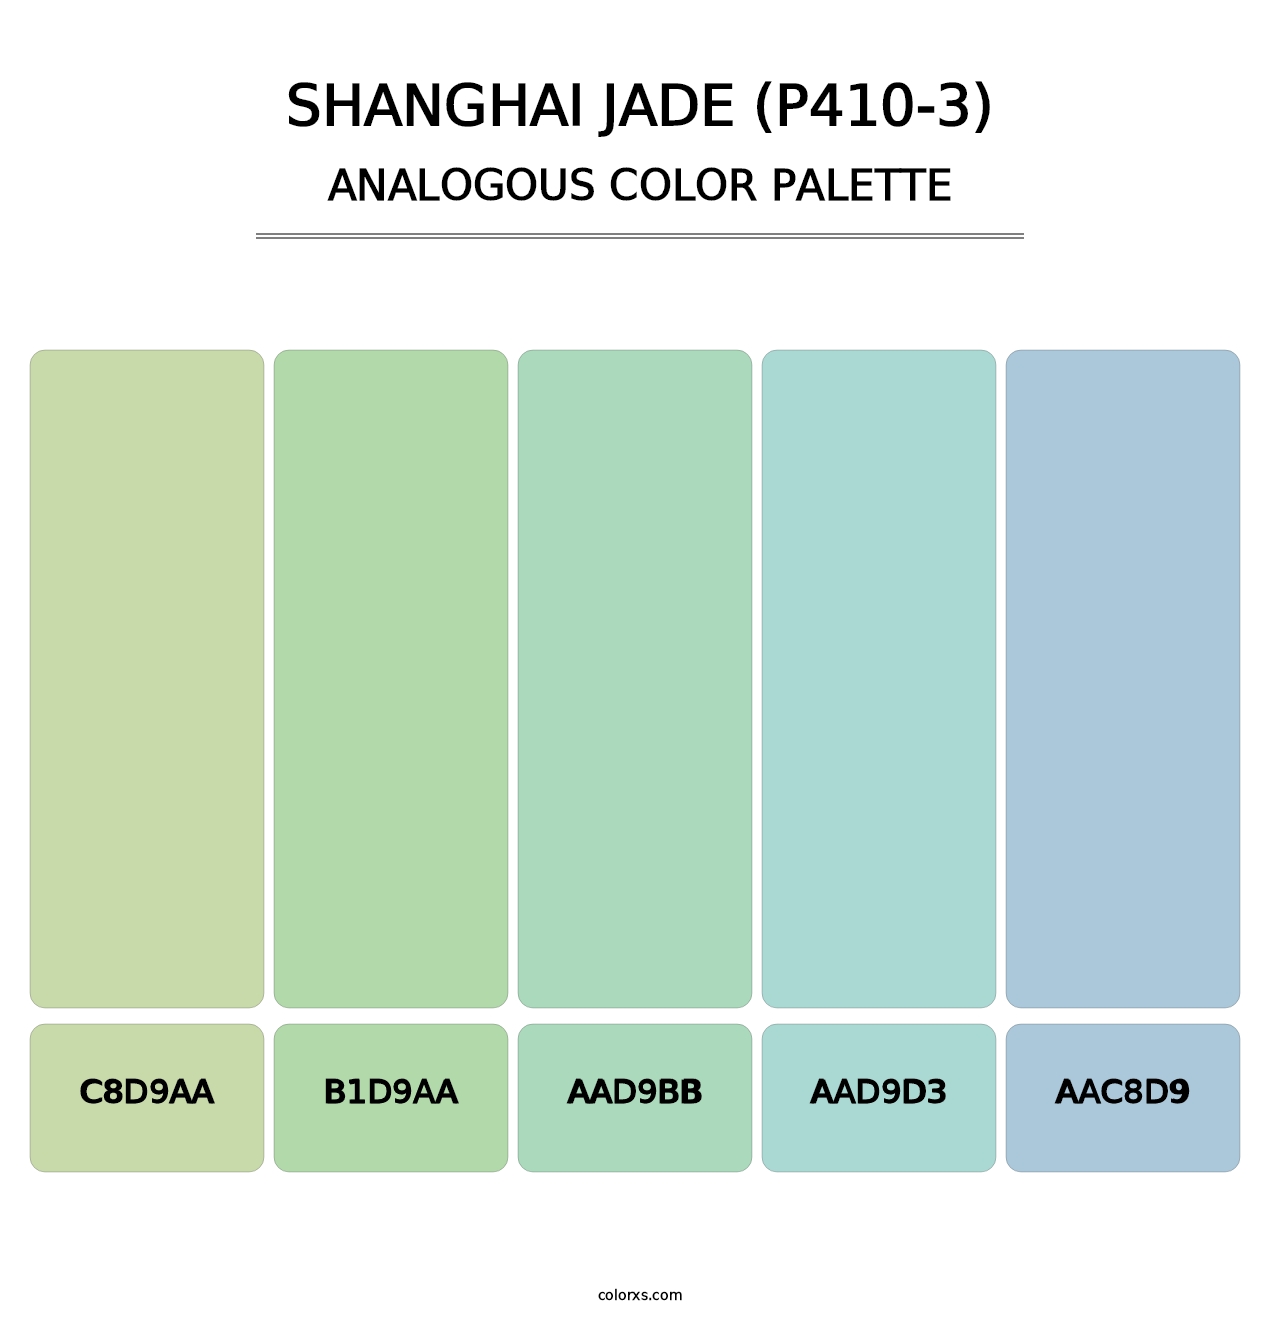 Shanghai Jade (P410-3) - Analogous Color Palette